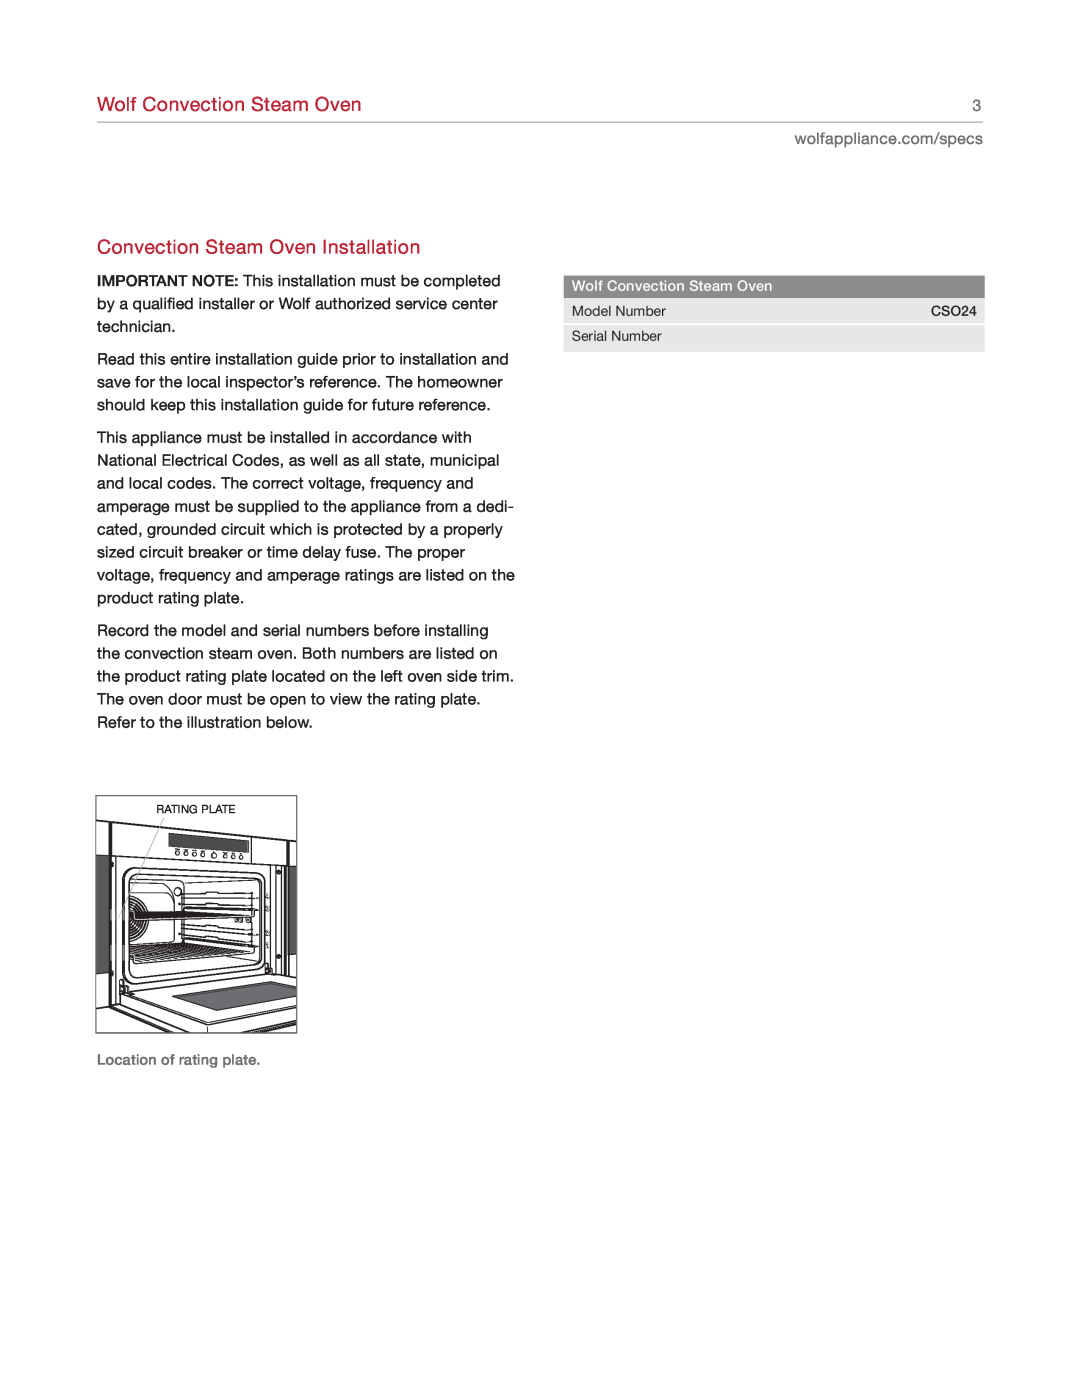 Sub-Zero CSO24 manual Wolf Convection Steam Oven, Convection Steam Oven Installation 